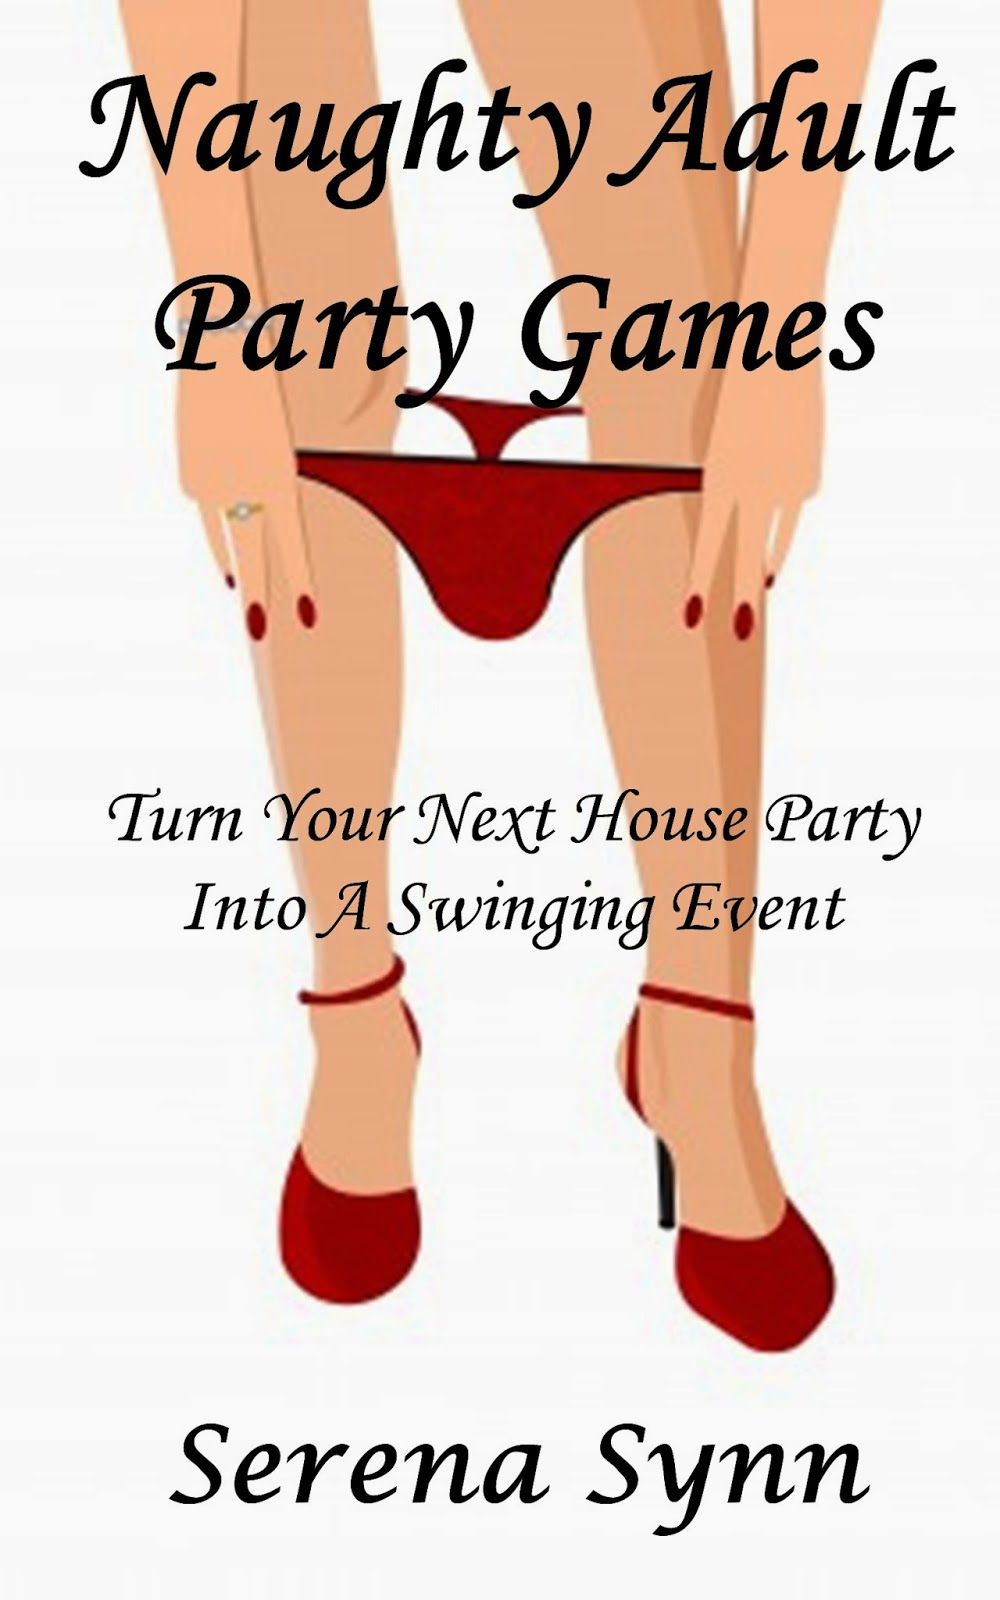 games for swingers swinger party games swinger sex games were swinging pic